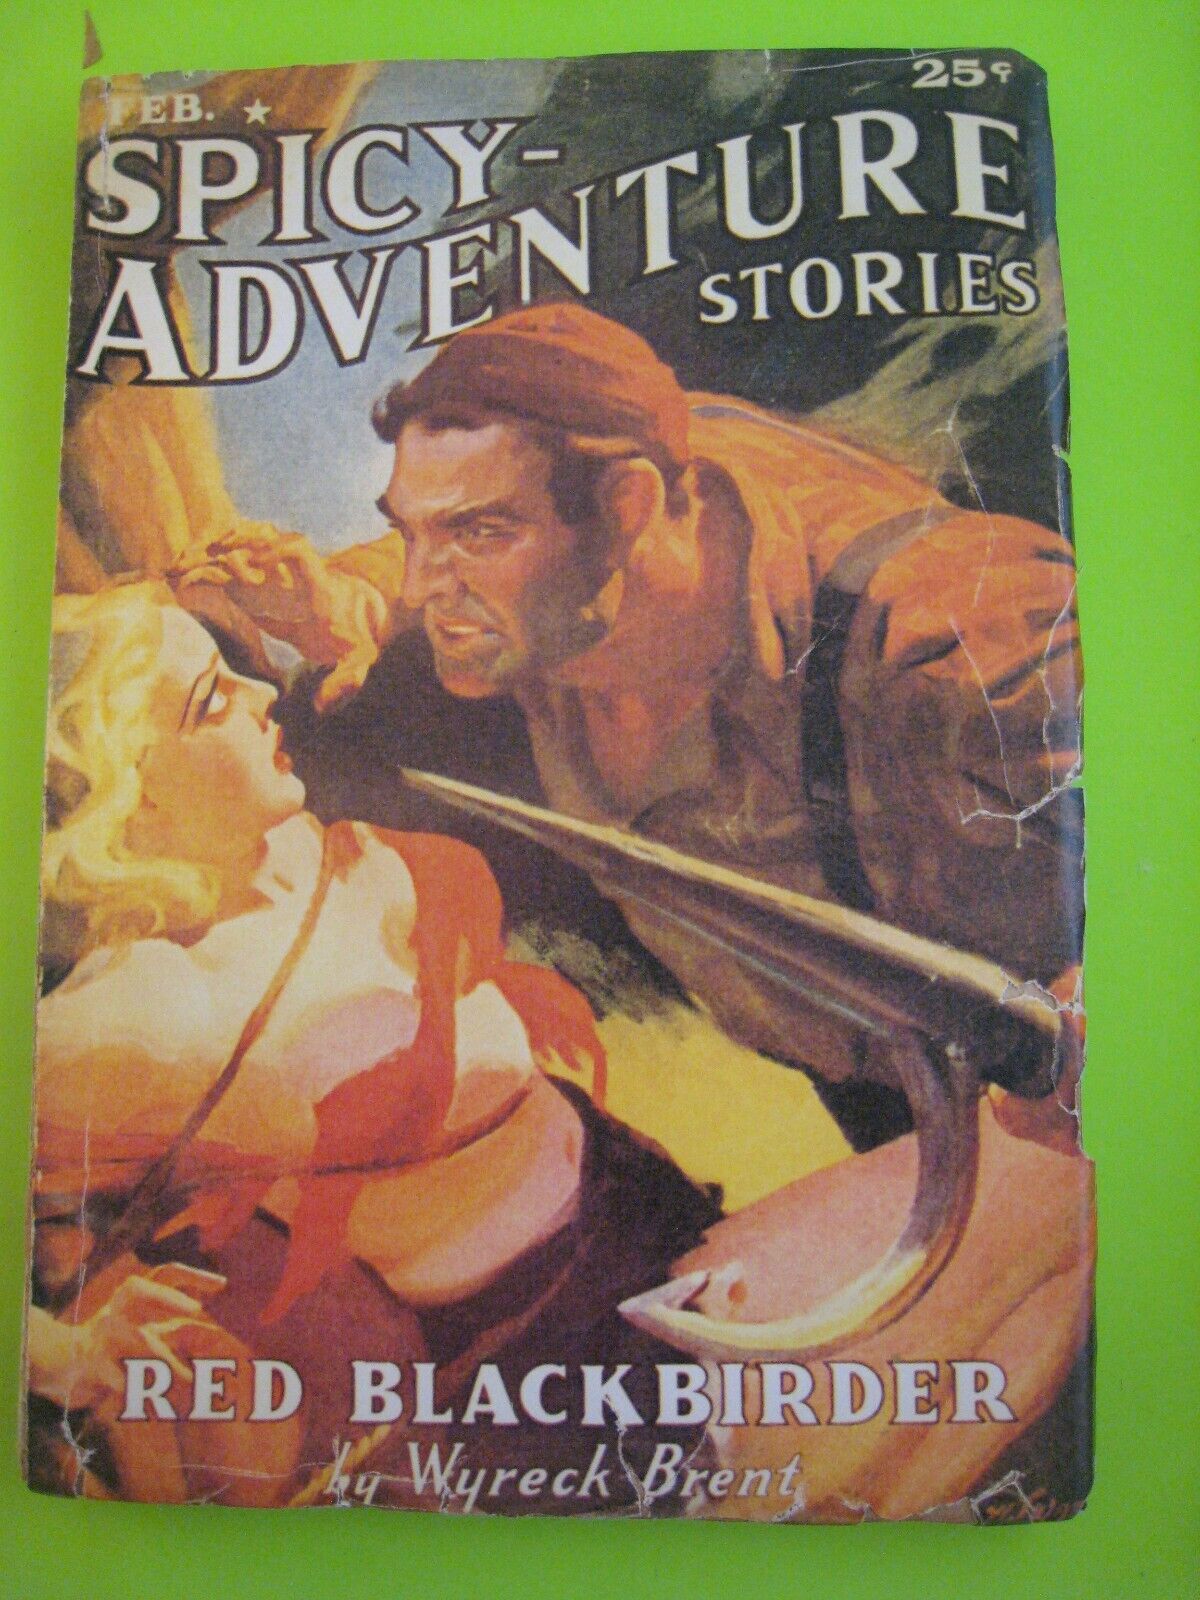 ORIGINAL Spicy Adventures Pulp Magazine - FEB. 1936 ... with Resto.